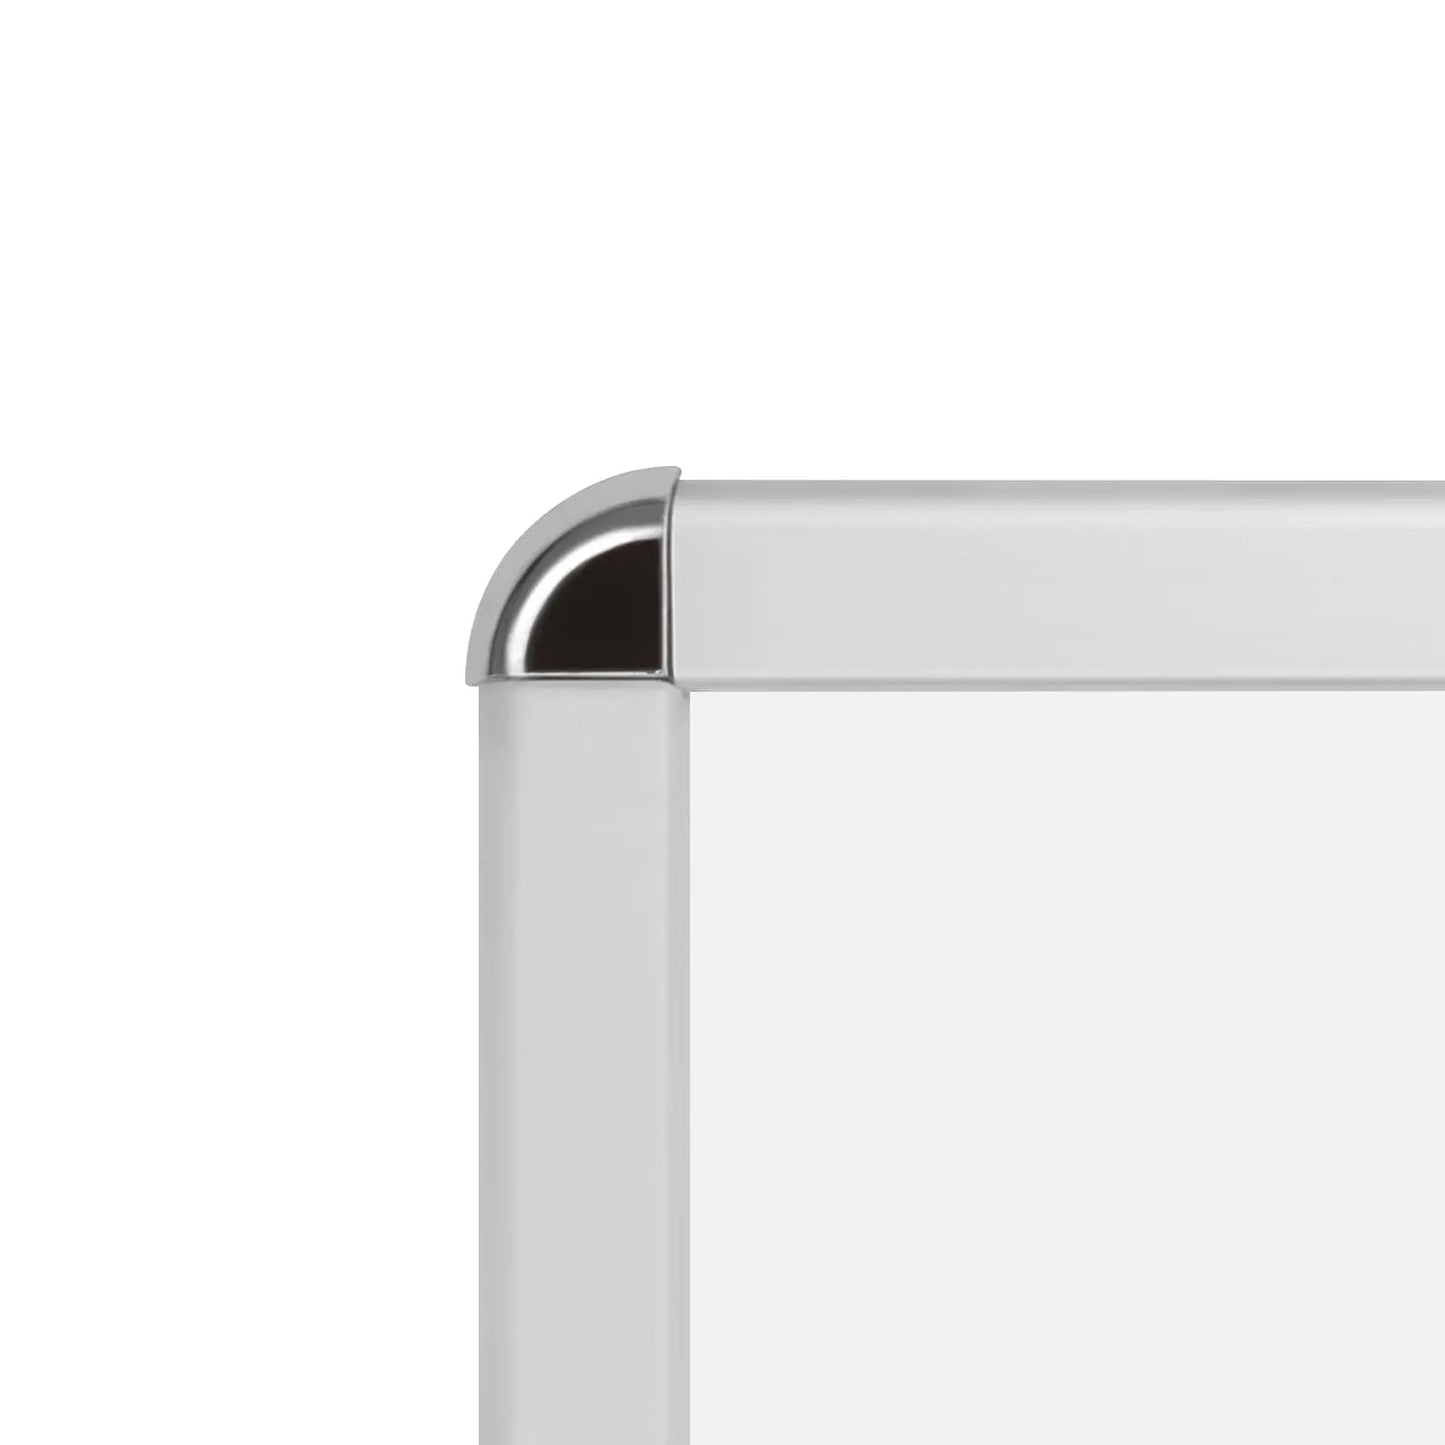 18x24 Silver SnapeZo® Round-Cornered - 1.25" Profile - Snap Frames Direct